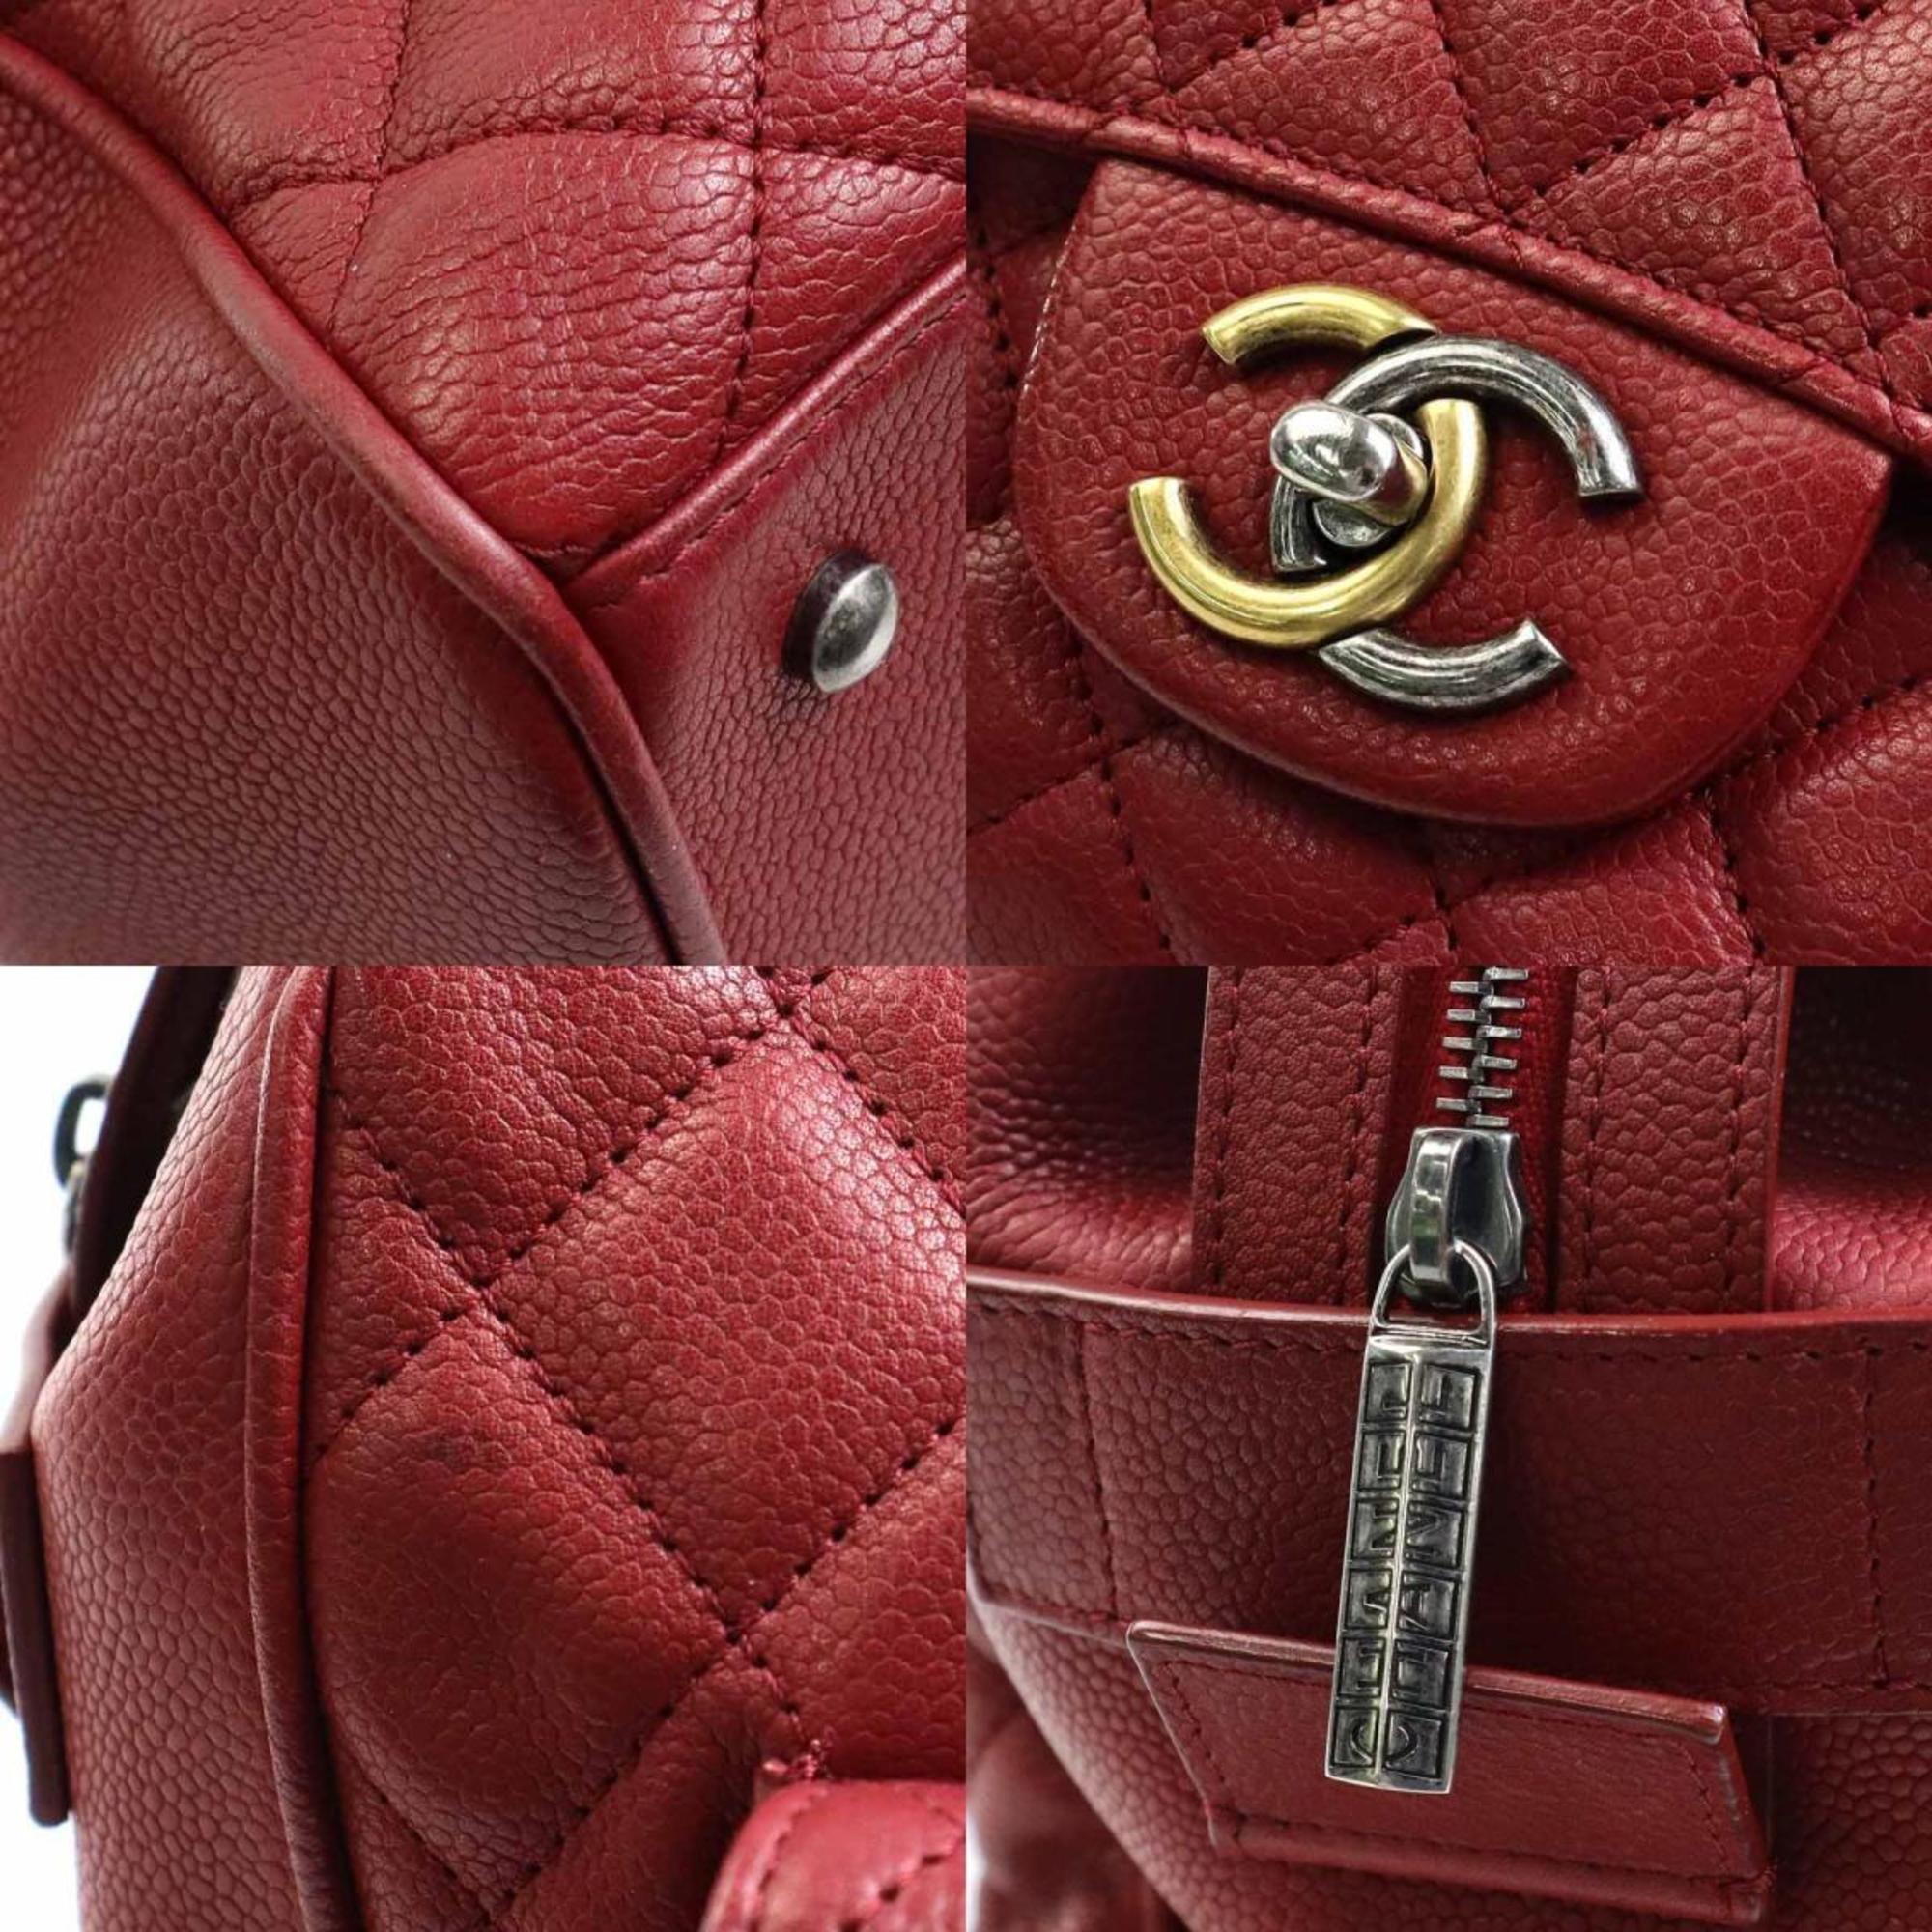 Chanel Chanel Women's Caviar Leather Handbag,Shoulder Bag Burgundy Size ONE SIZE - 3 Thumbnail